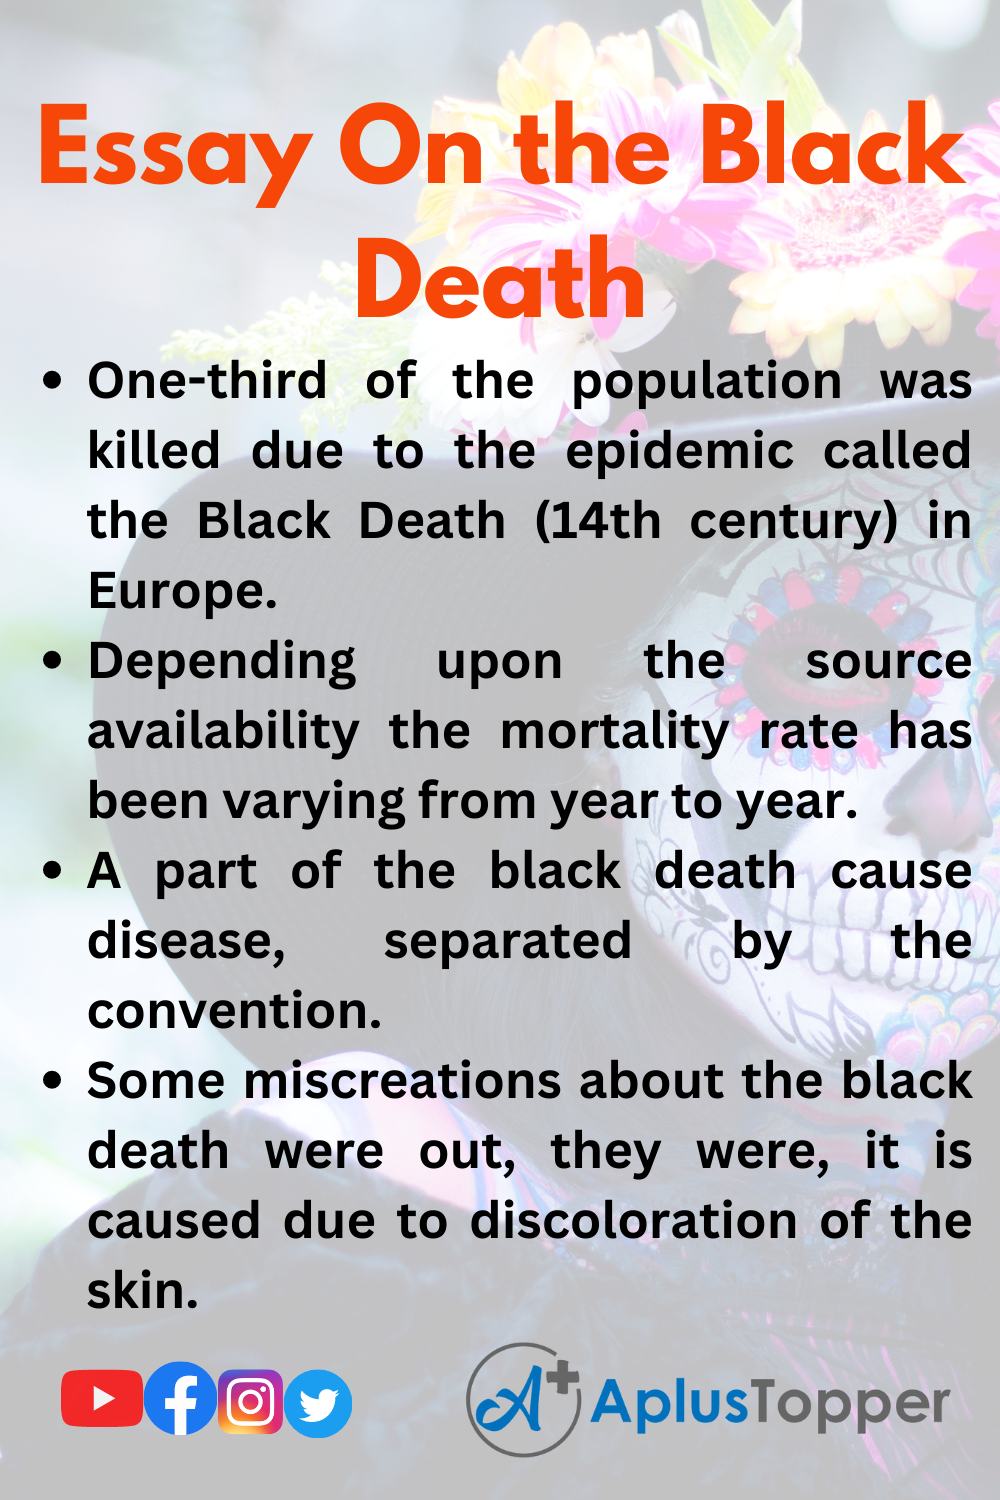 impact of the black death essay